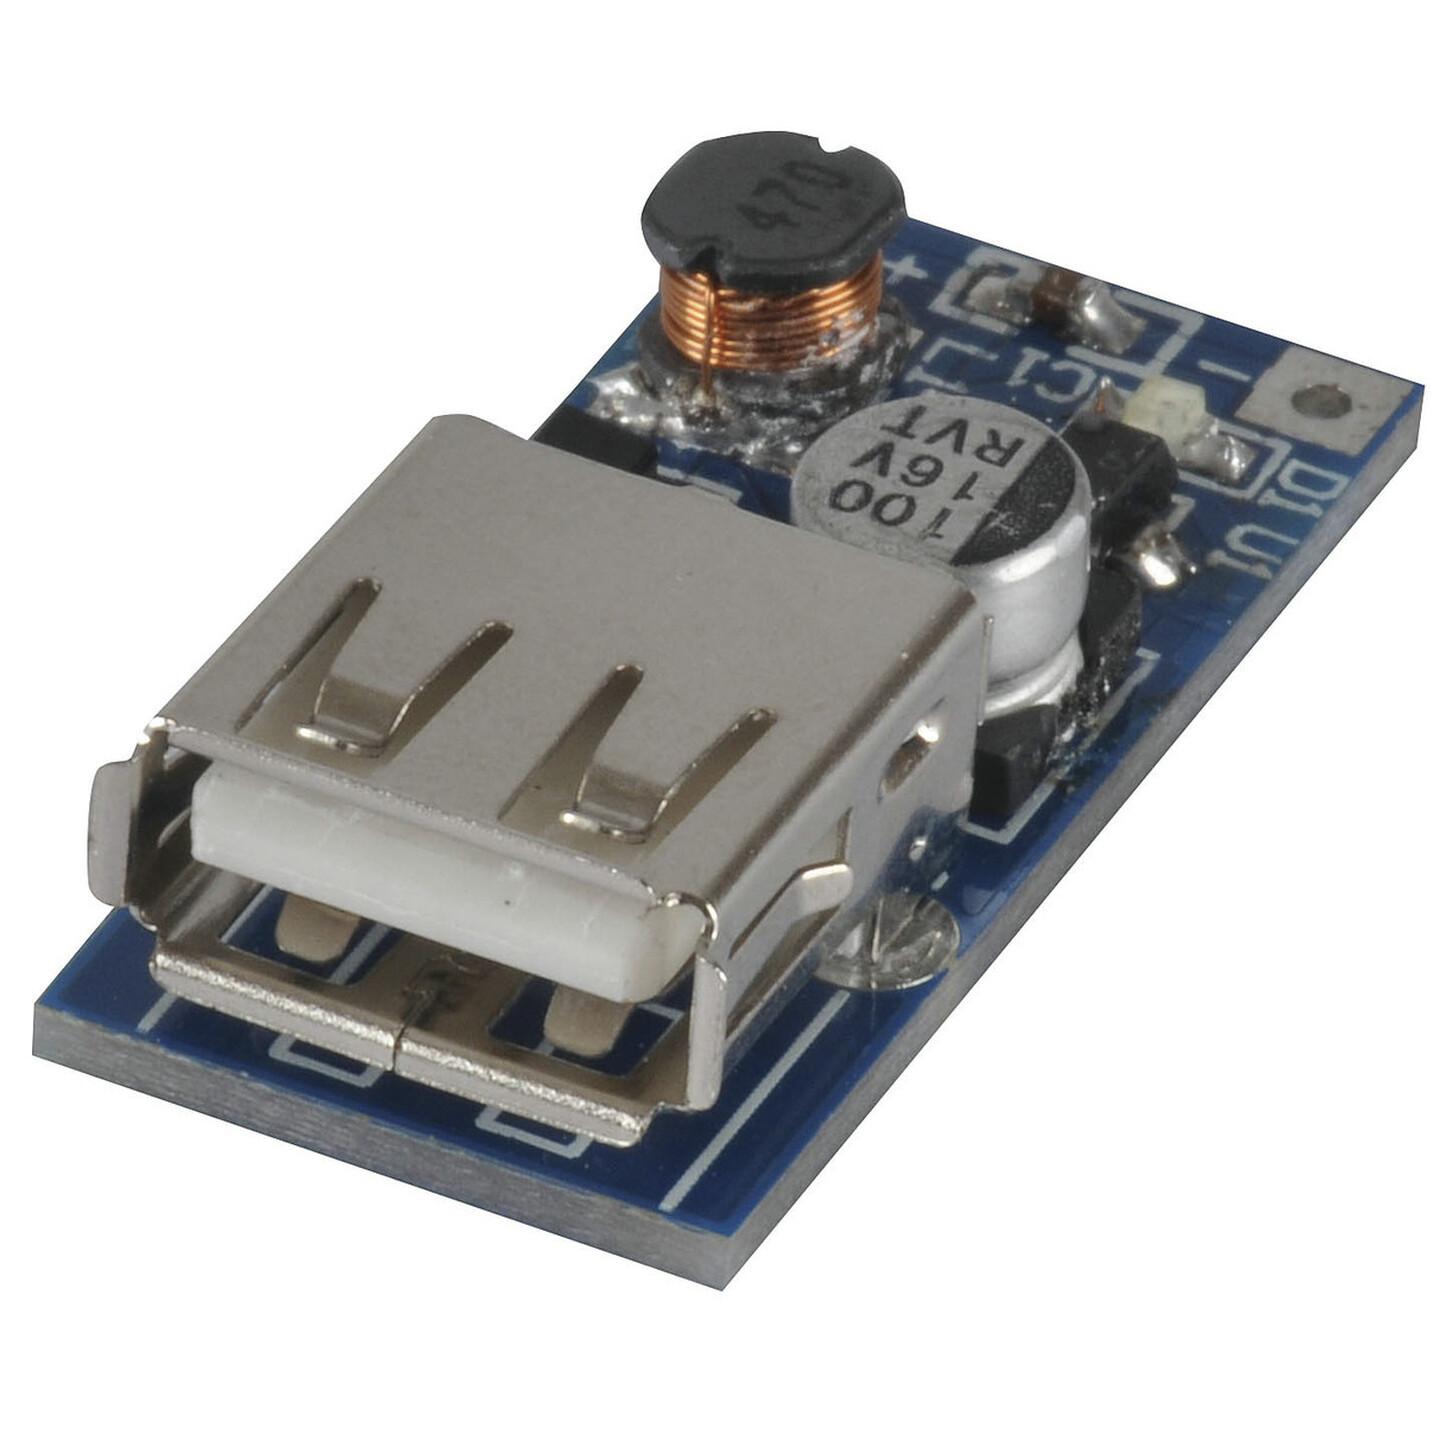 Duinotech Arduino Compatible 5V DC to DC Converter Module